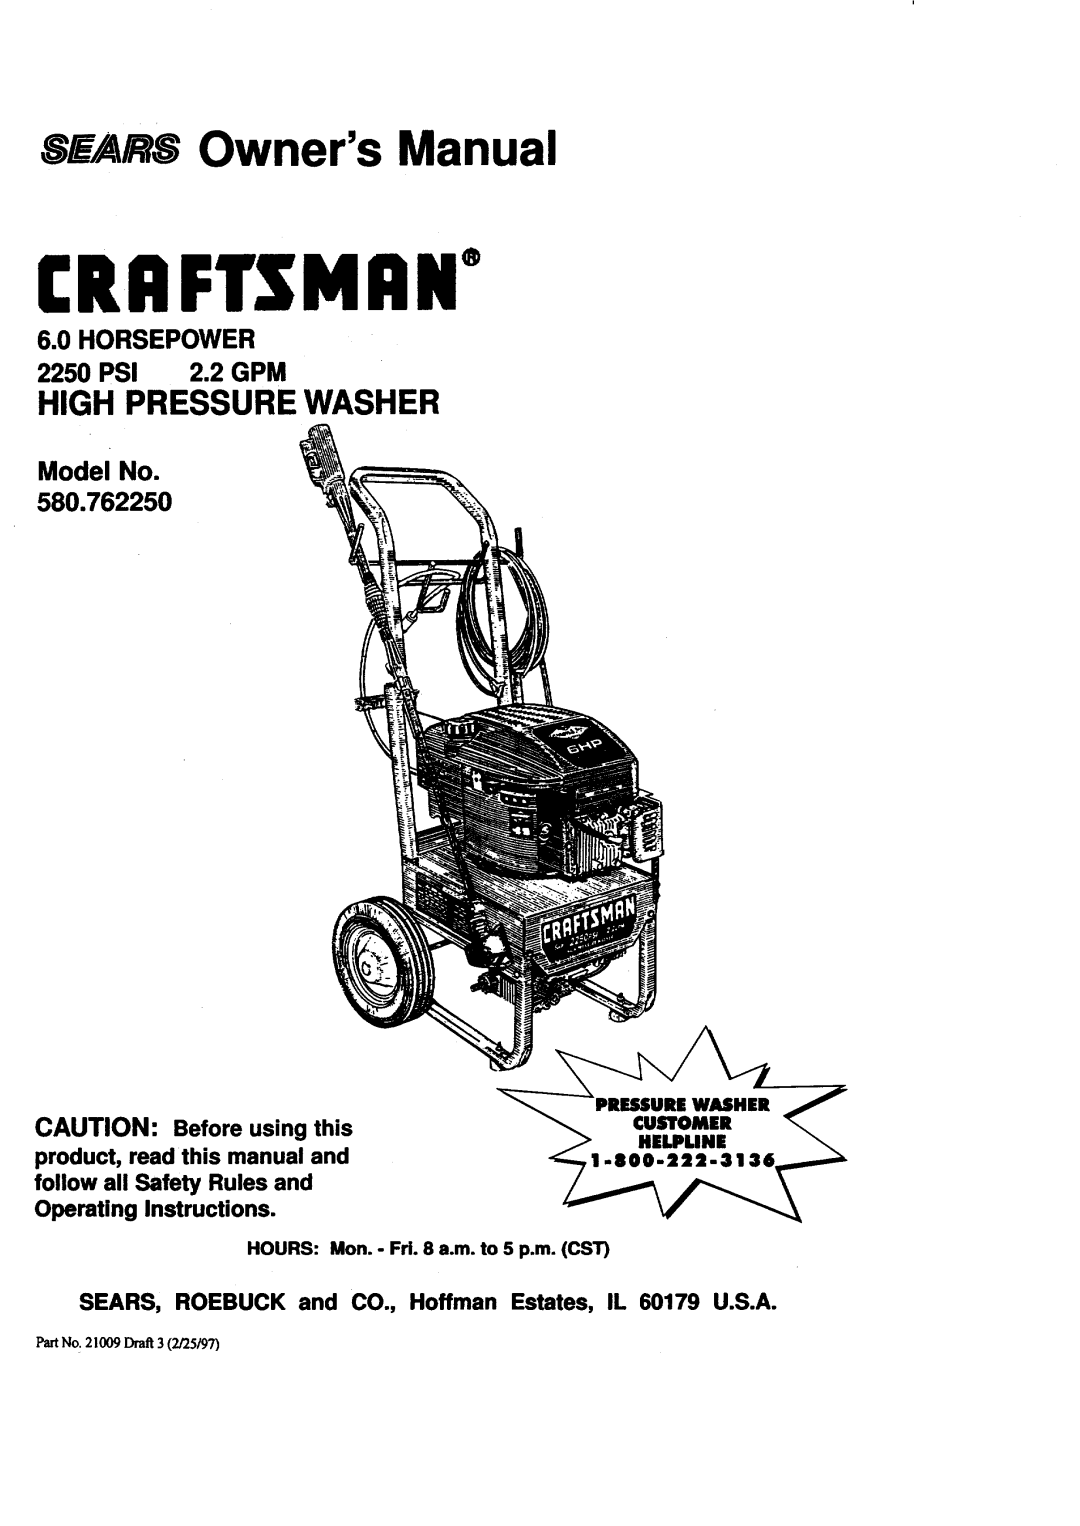 Craftsman 580.76225 owner manual Craftsman, High Pressure Washer, HORSEPOWER 2250 PSI 2.2 GPM, Model No 